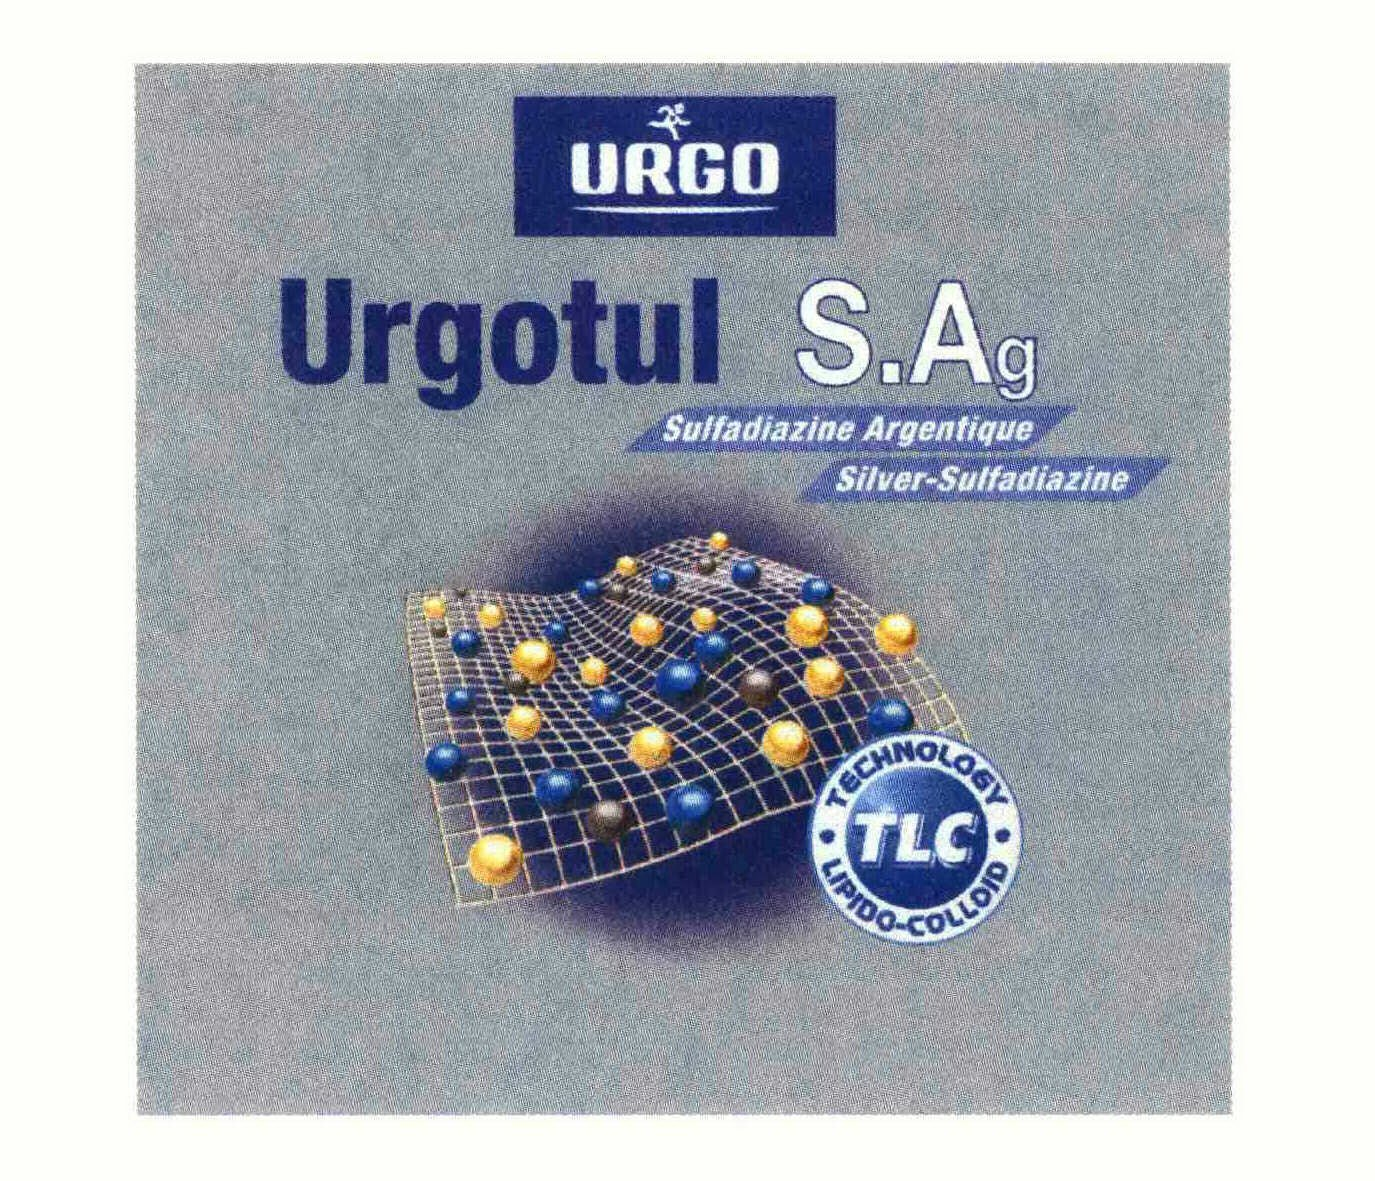  URGO URGOTUL S.AG SULFADIAZINE ARGENTIQUE SILVER-SULFADIAZINE TECHNOLOGY LIPIDO-COLLOID TLC